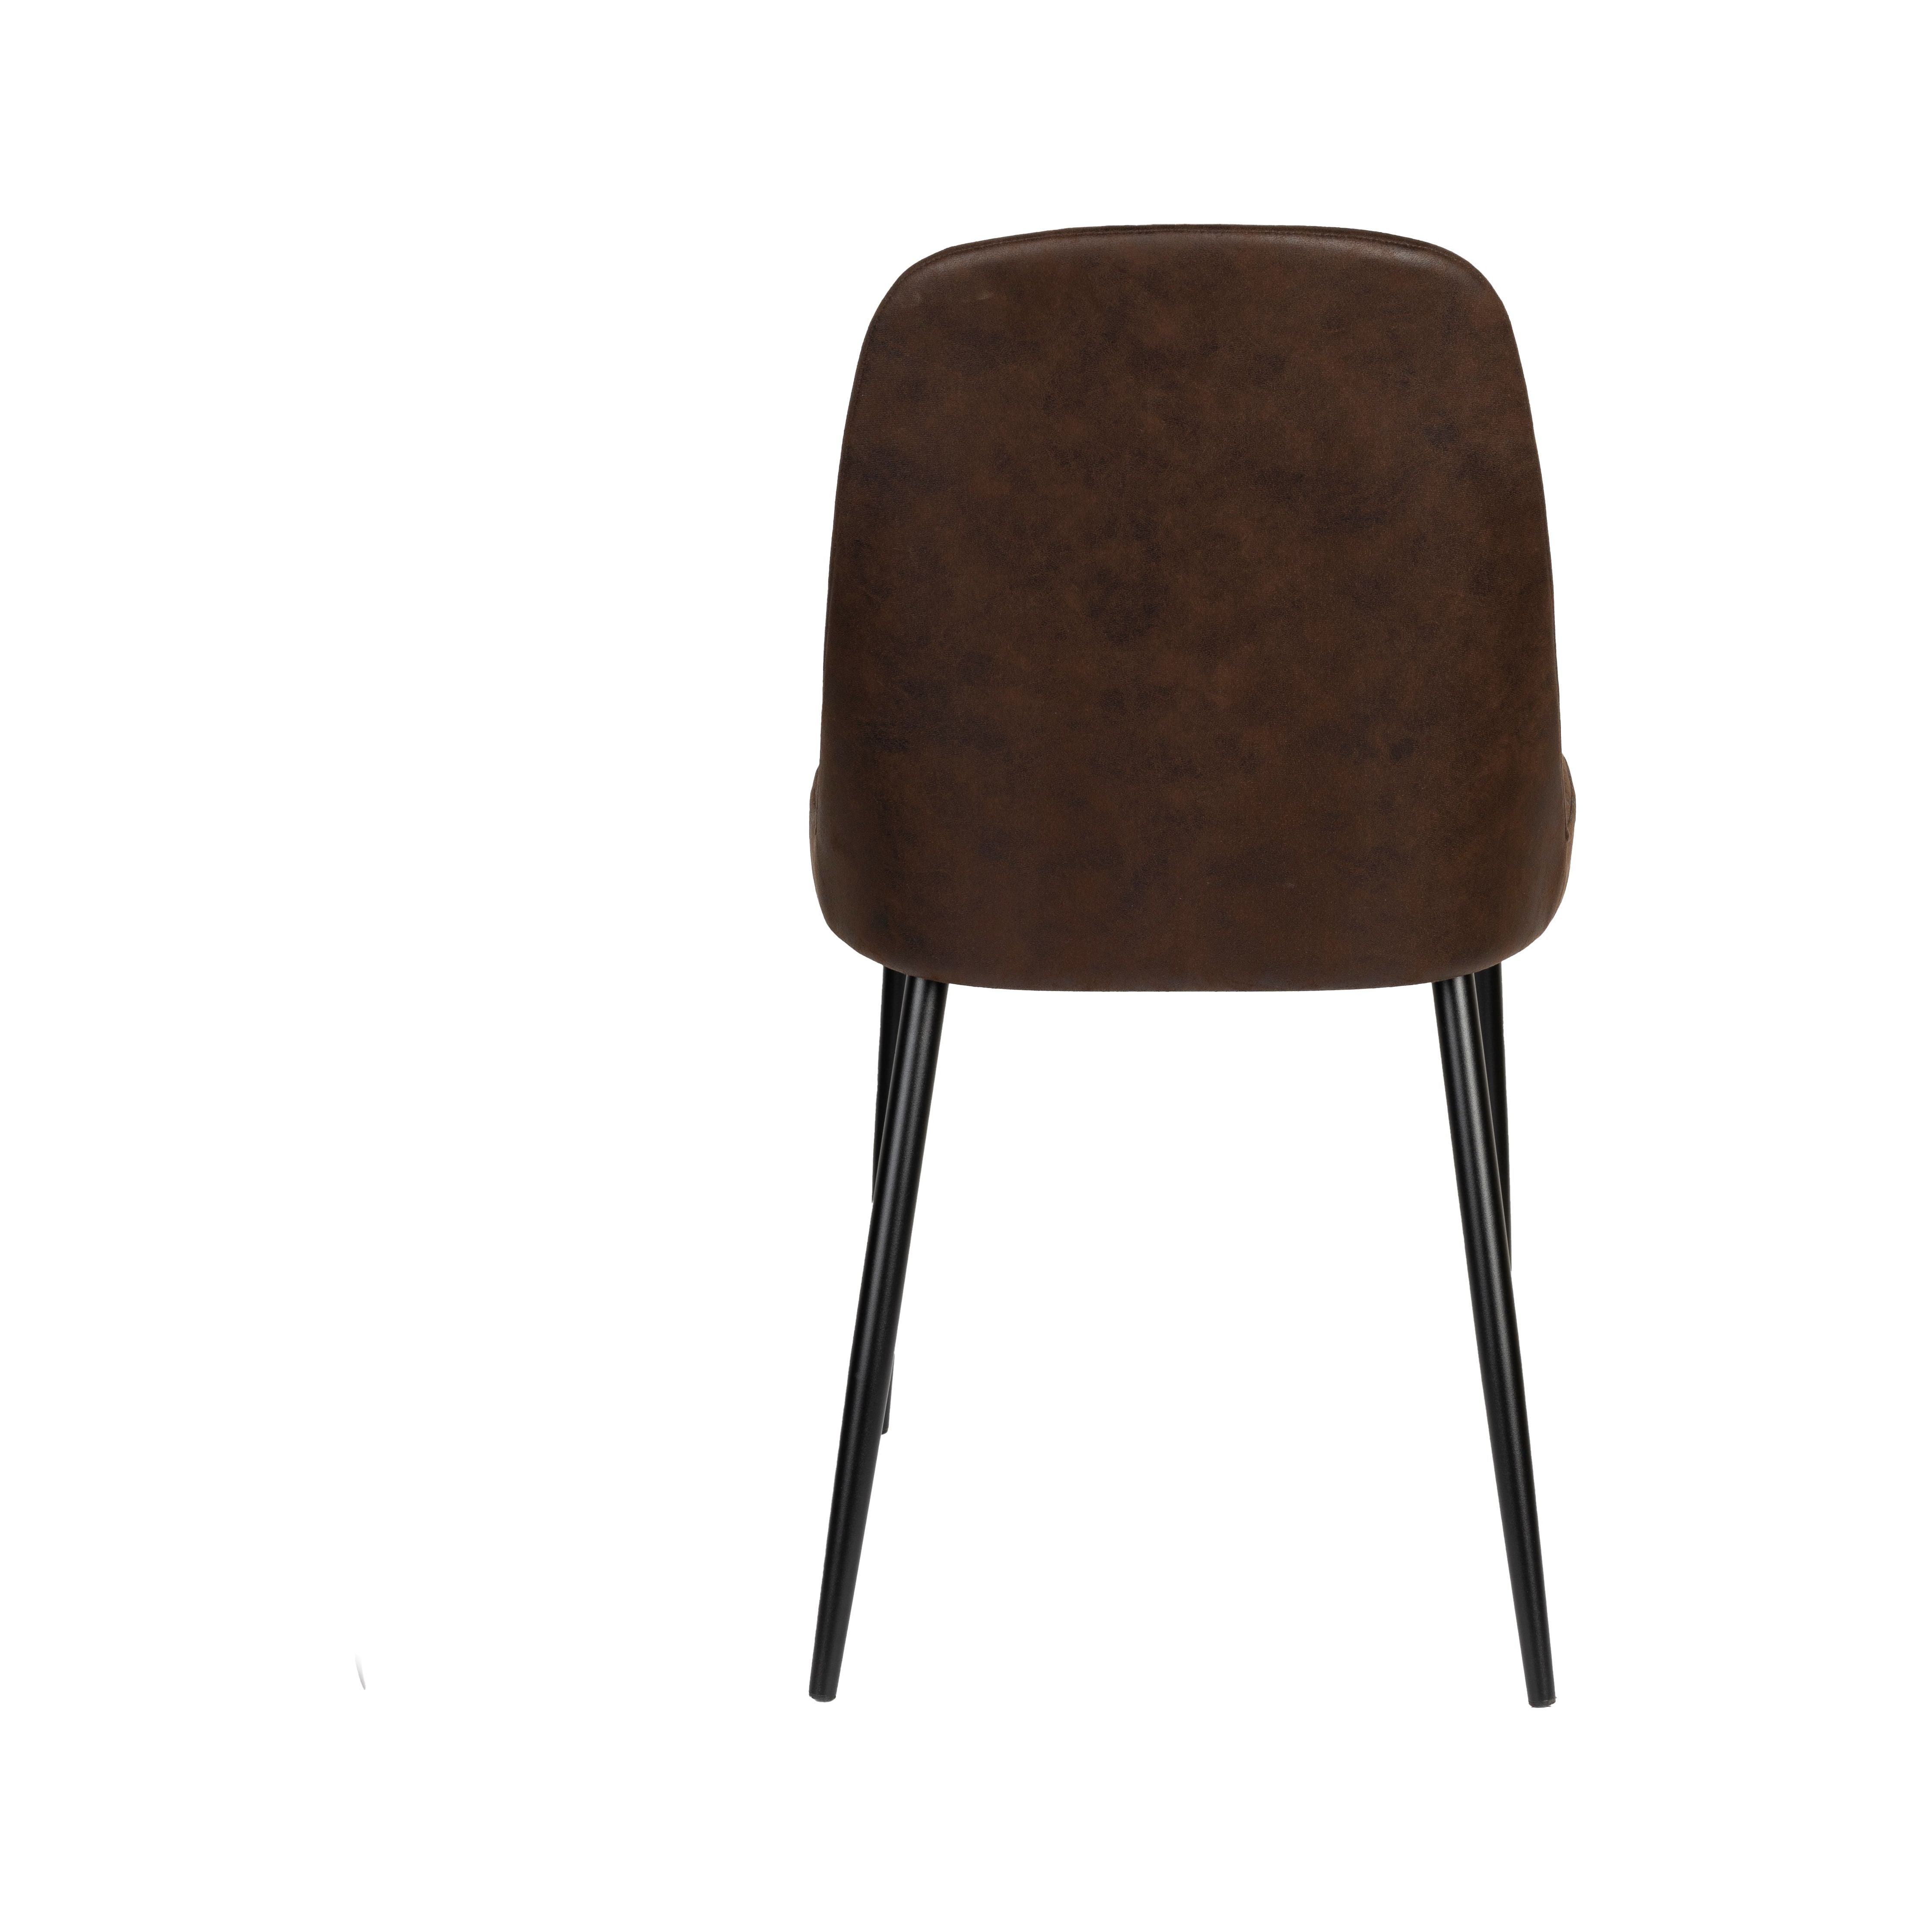 Chair alana brown